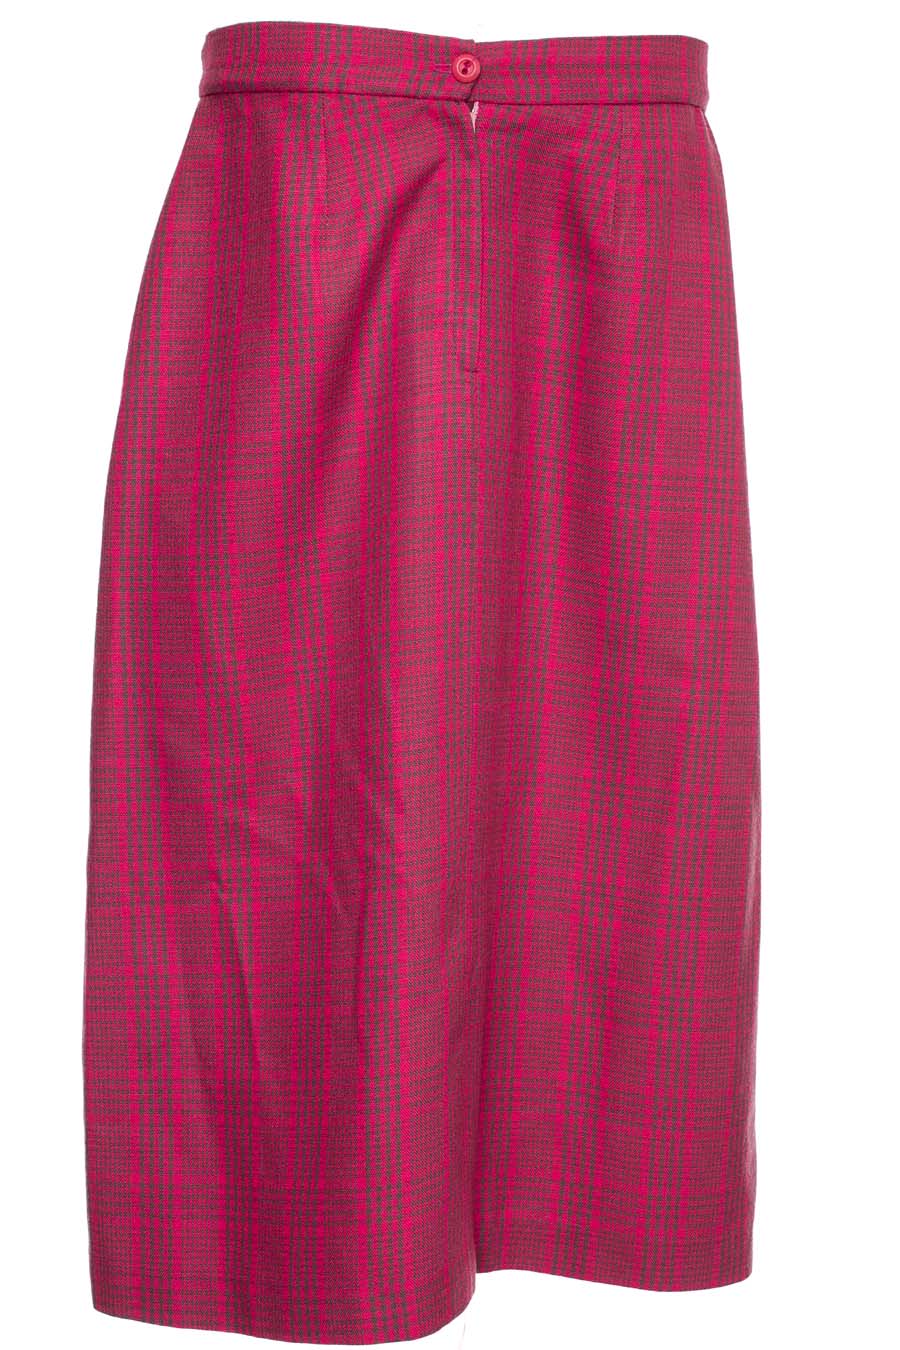 On Wednesday we wear pink Vintage Skirt